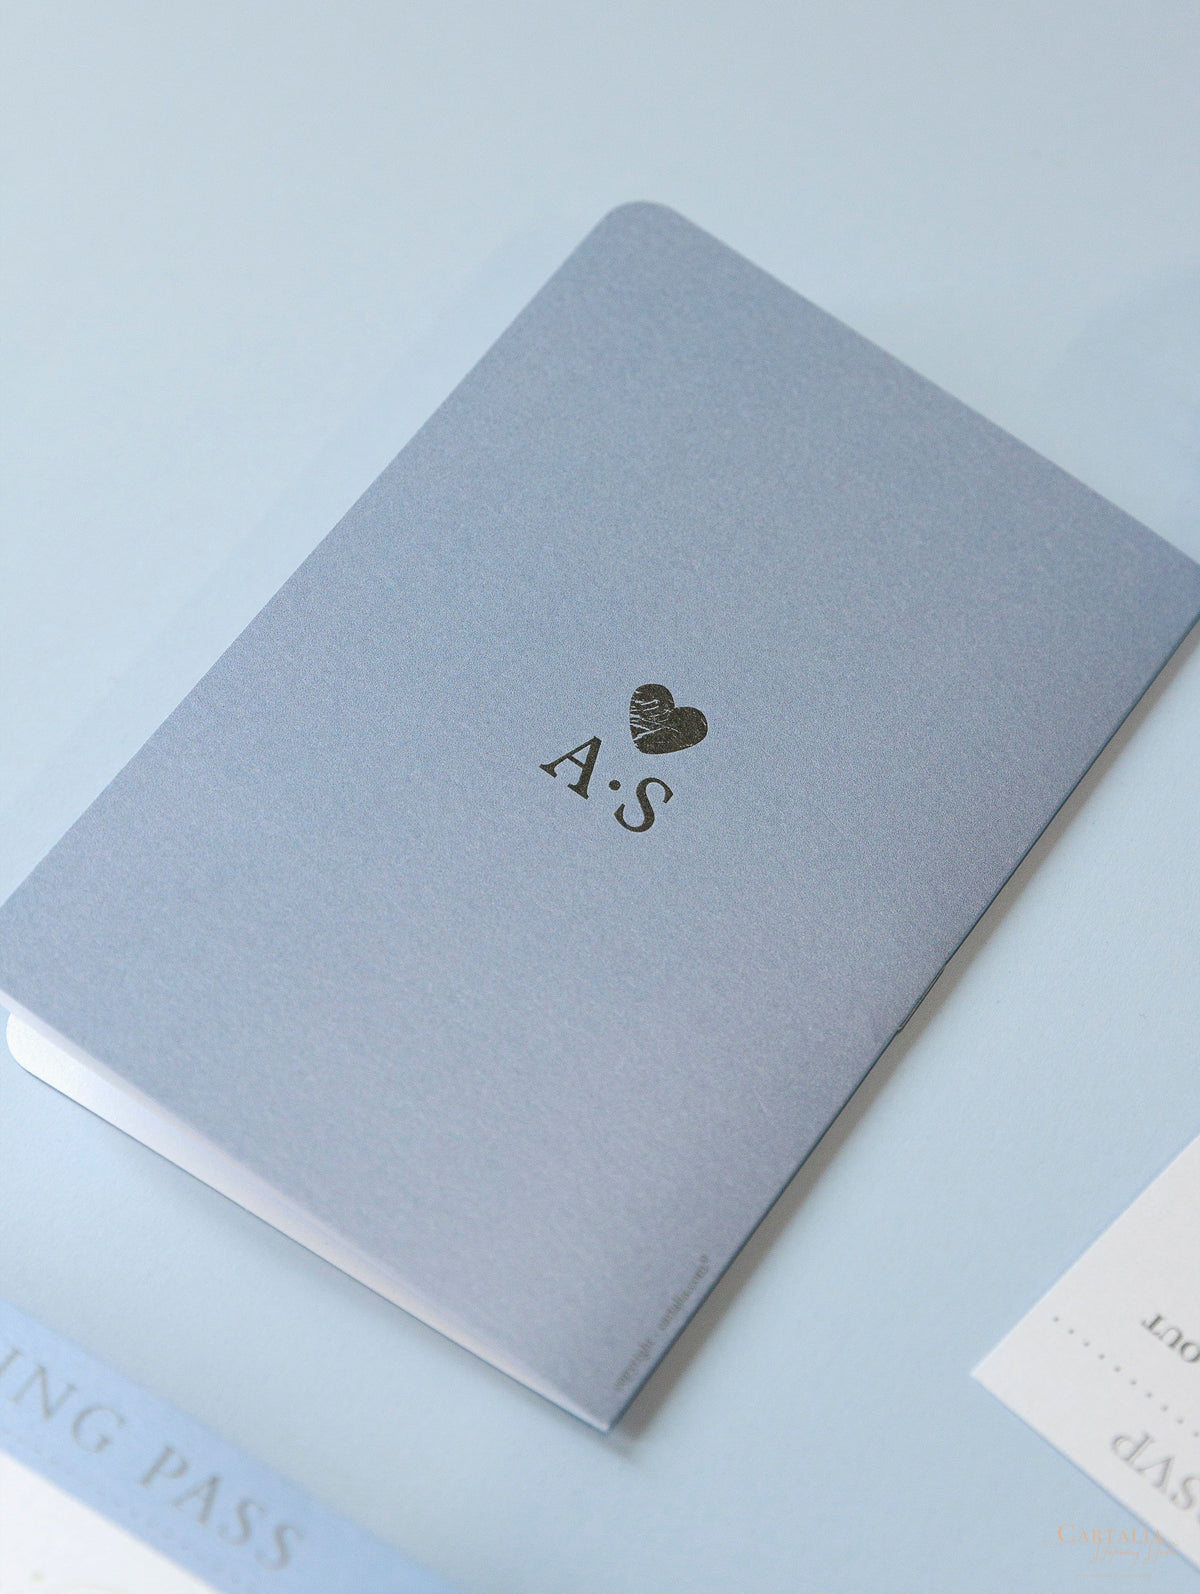 Dusty Blue & Gold Wedding Passport Invite Folder: Luxury Wallet & Tag Passport Invitation